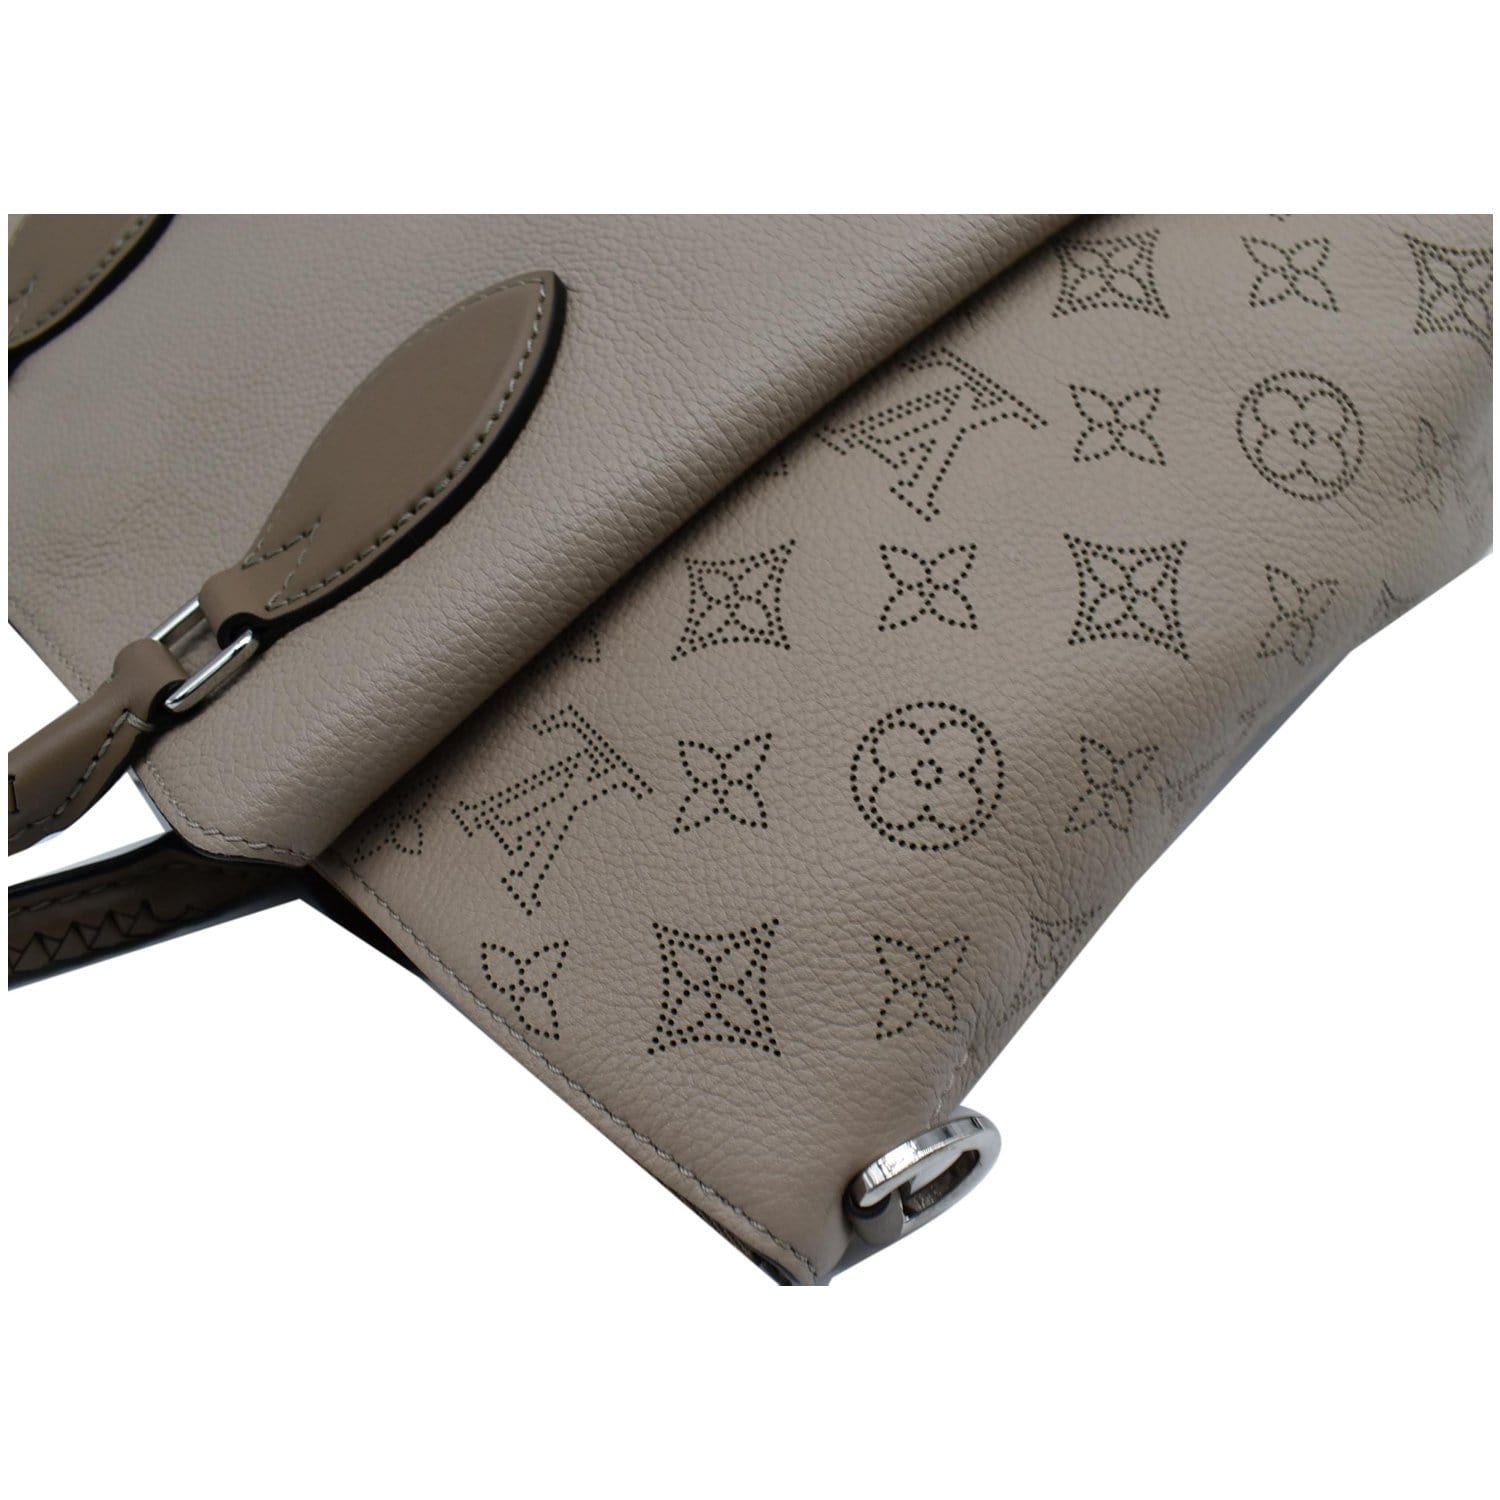 Mahina Leather Haumea Bag Magnolia M55030  Bags, Louis vuitton bag,  Popular handbags